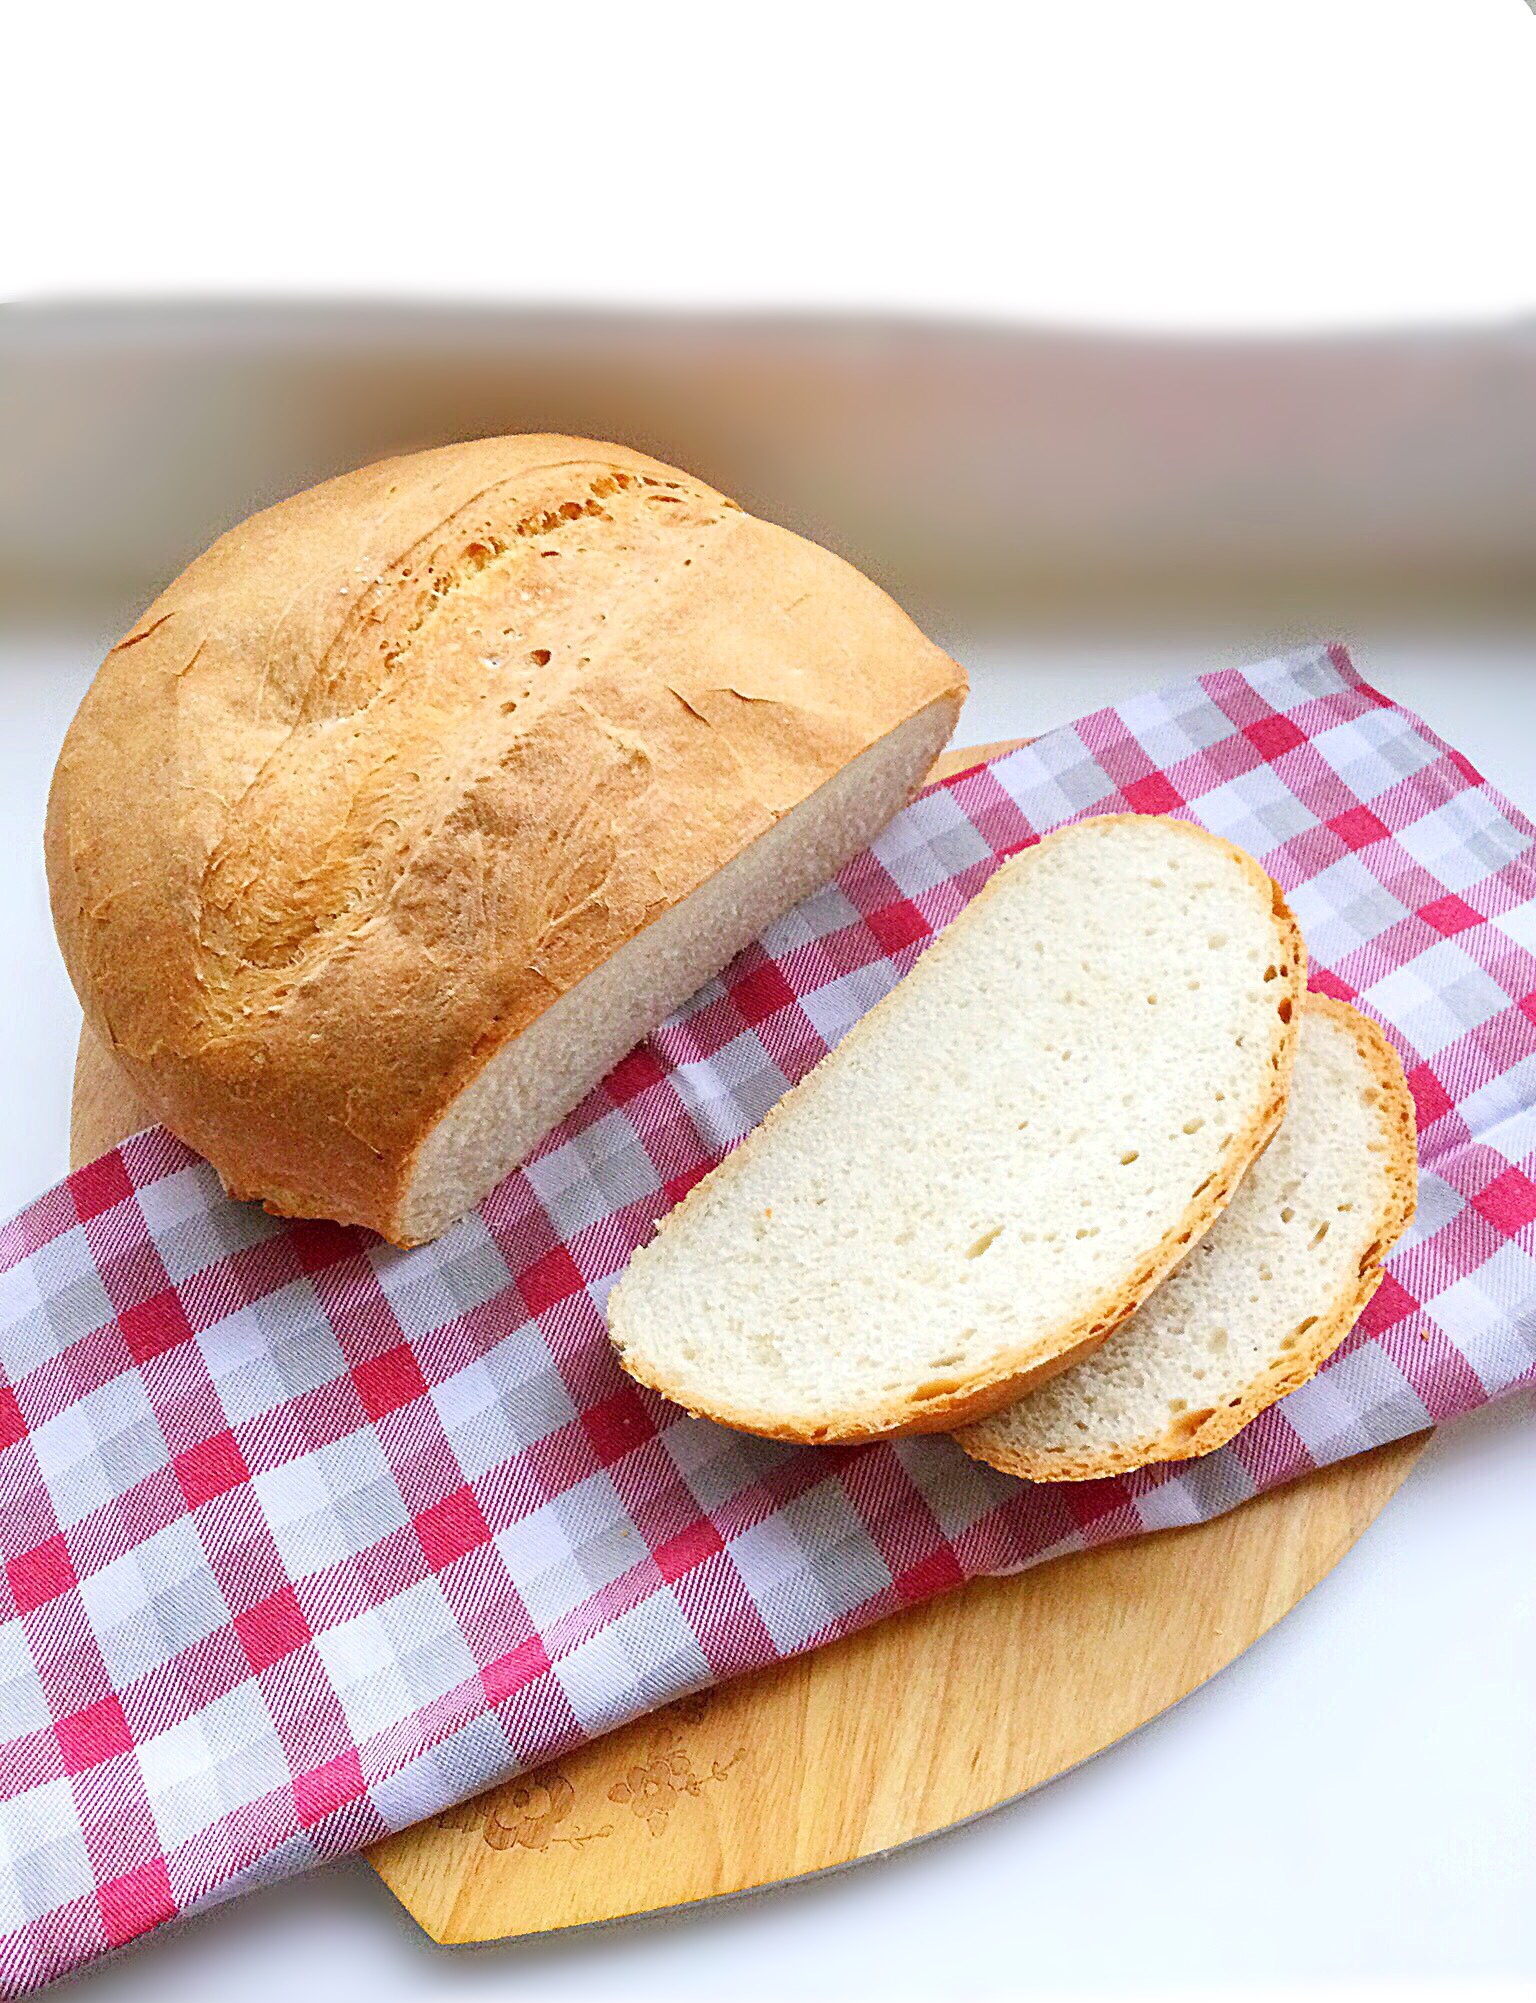 Easy Stand Mixer Sourdough Bread : Hearts Content Farmhouse